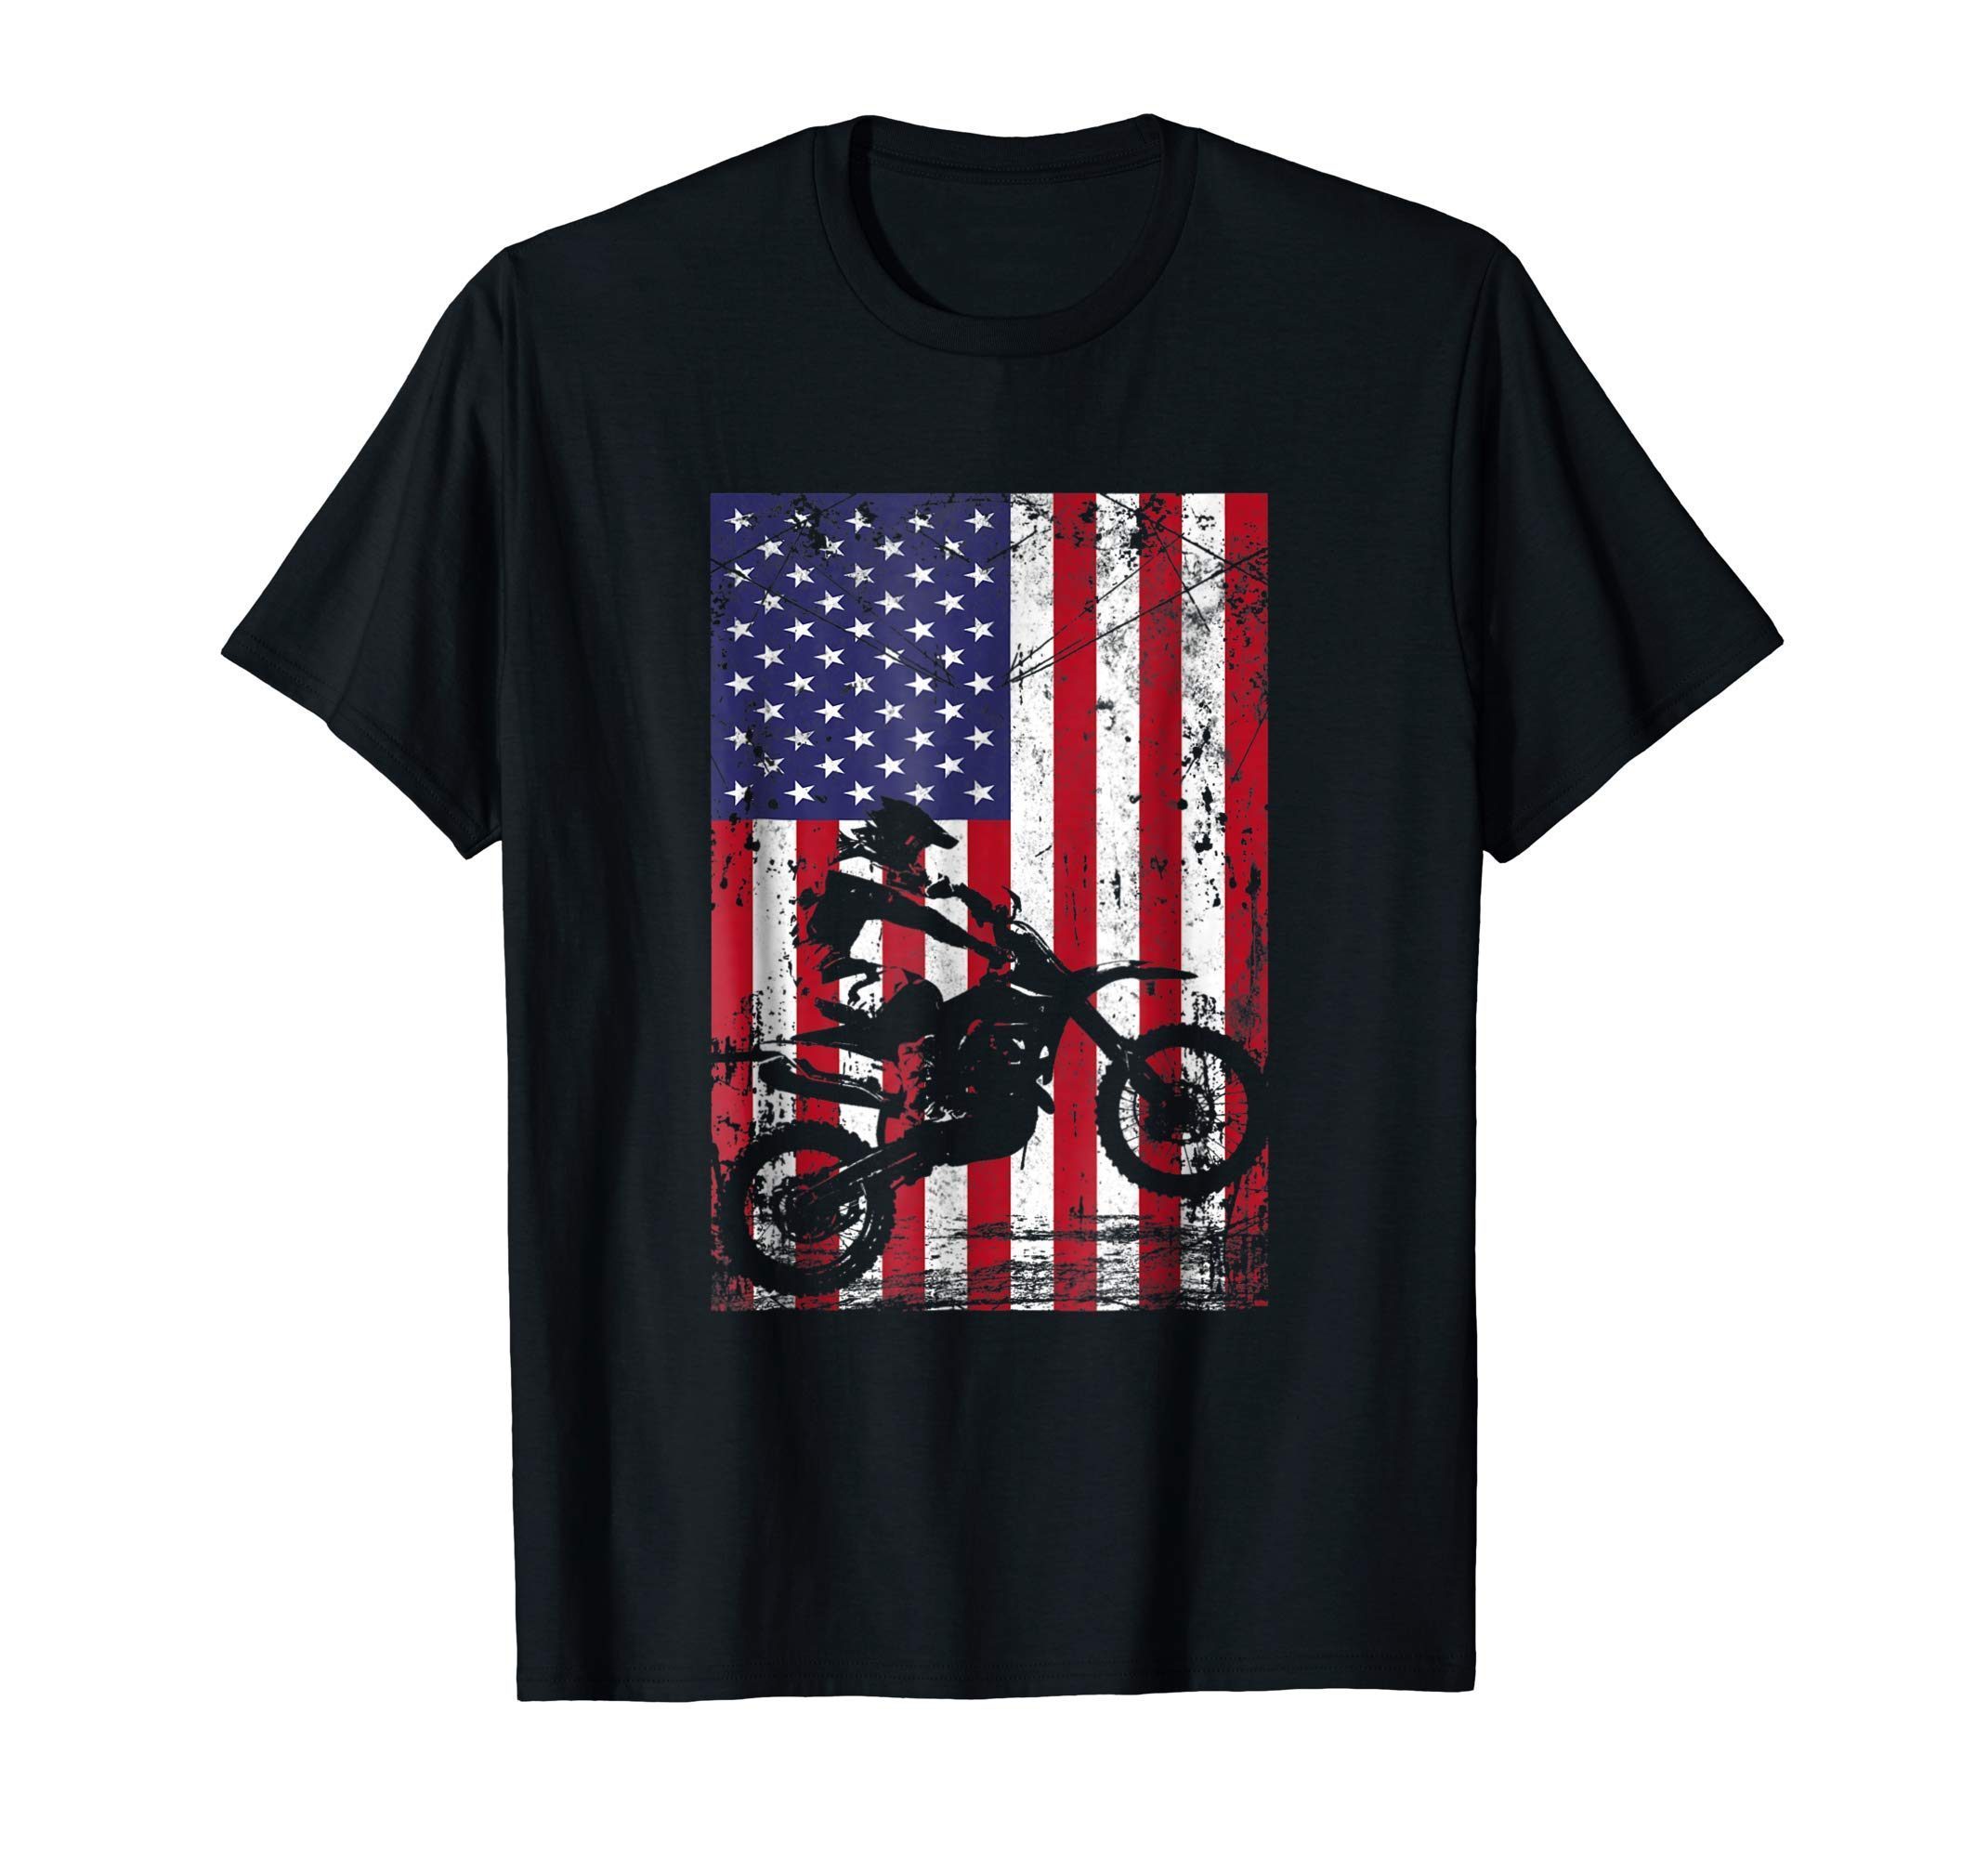 Dirt Bike American Flag Shirt 4th of july t shirt - Reviewshirts Office